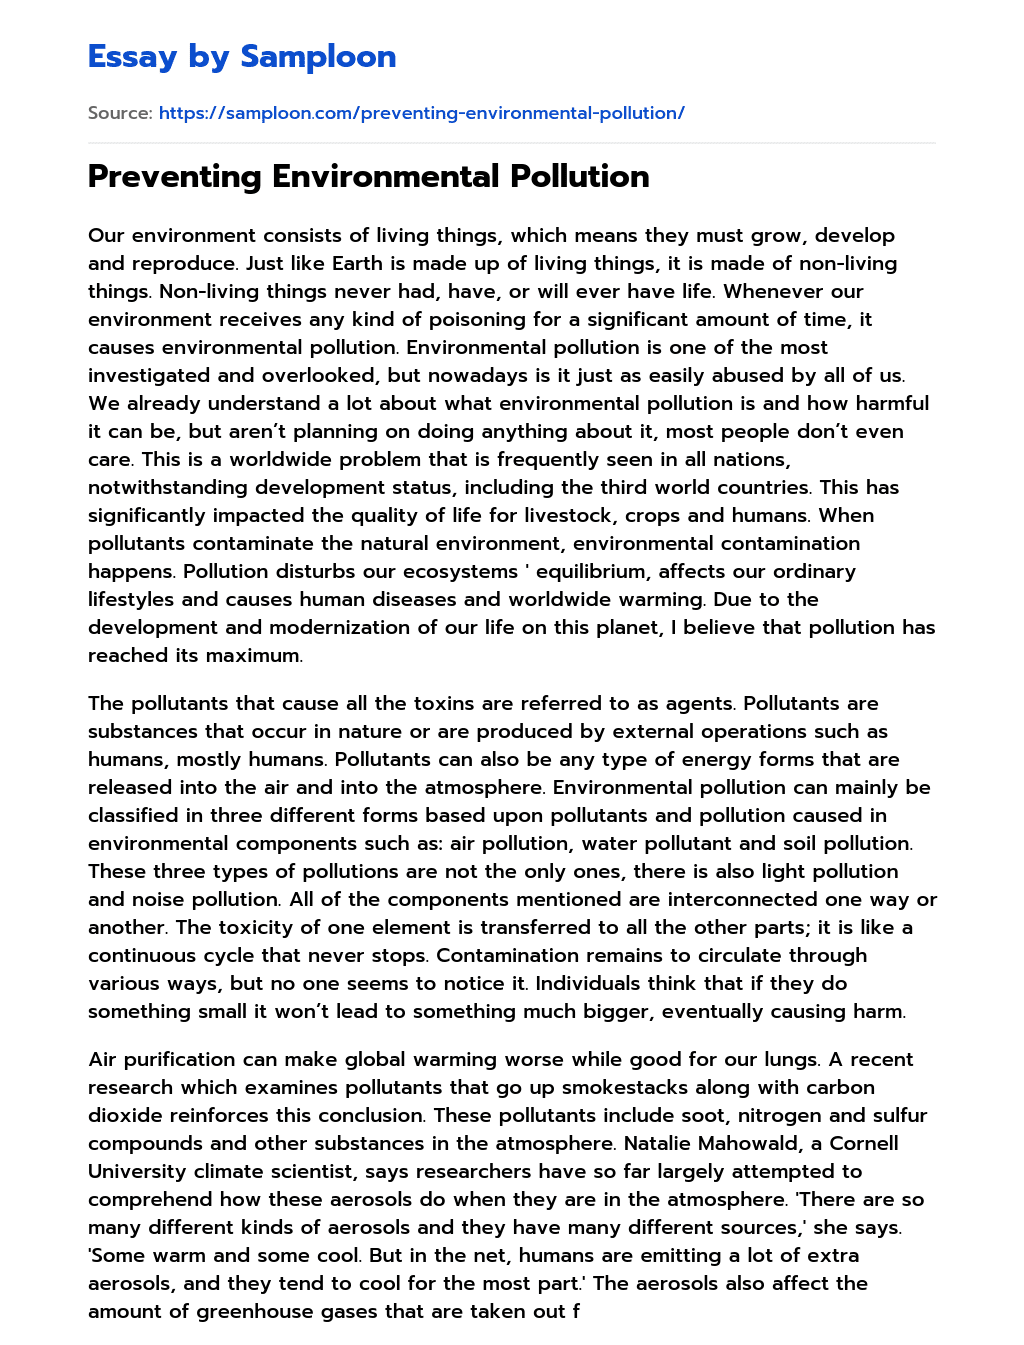 Preventing Environmental Pollution essay